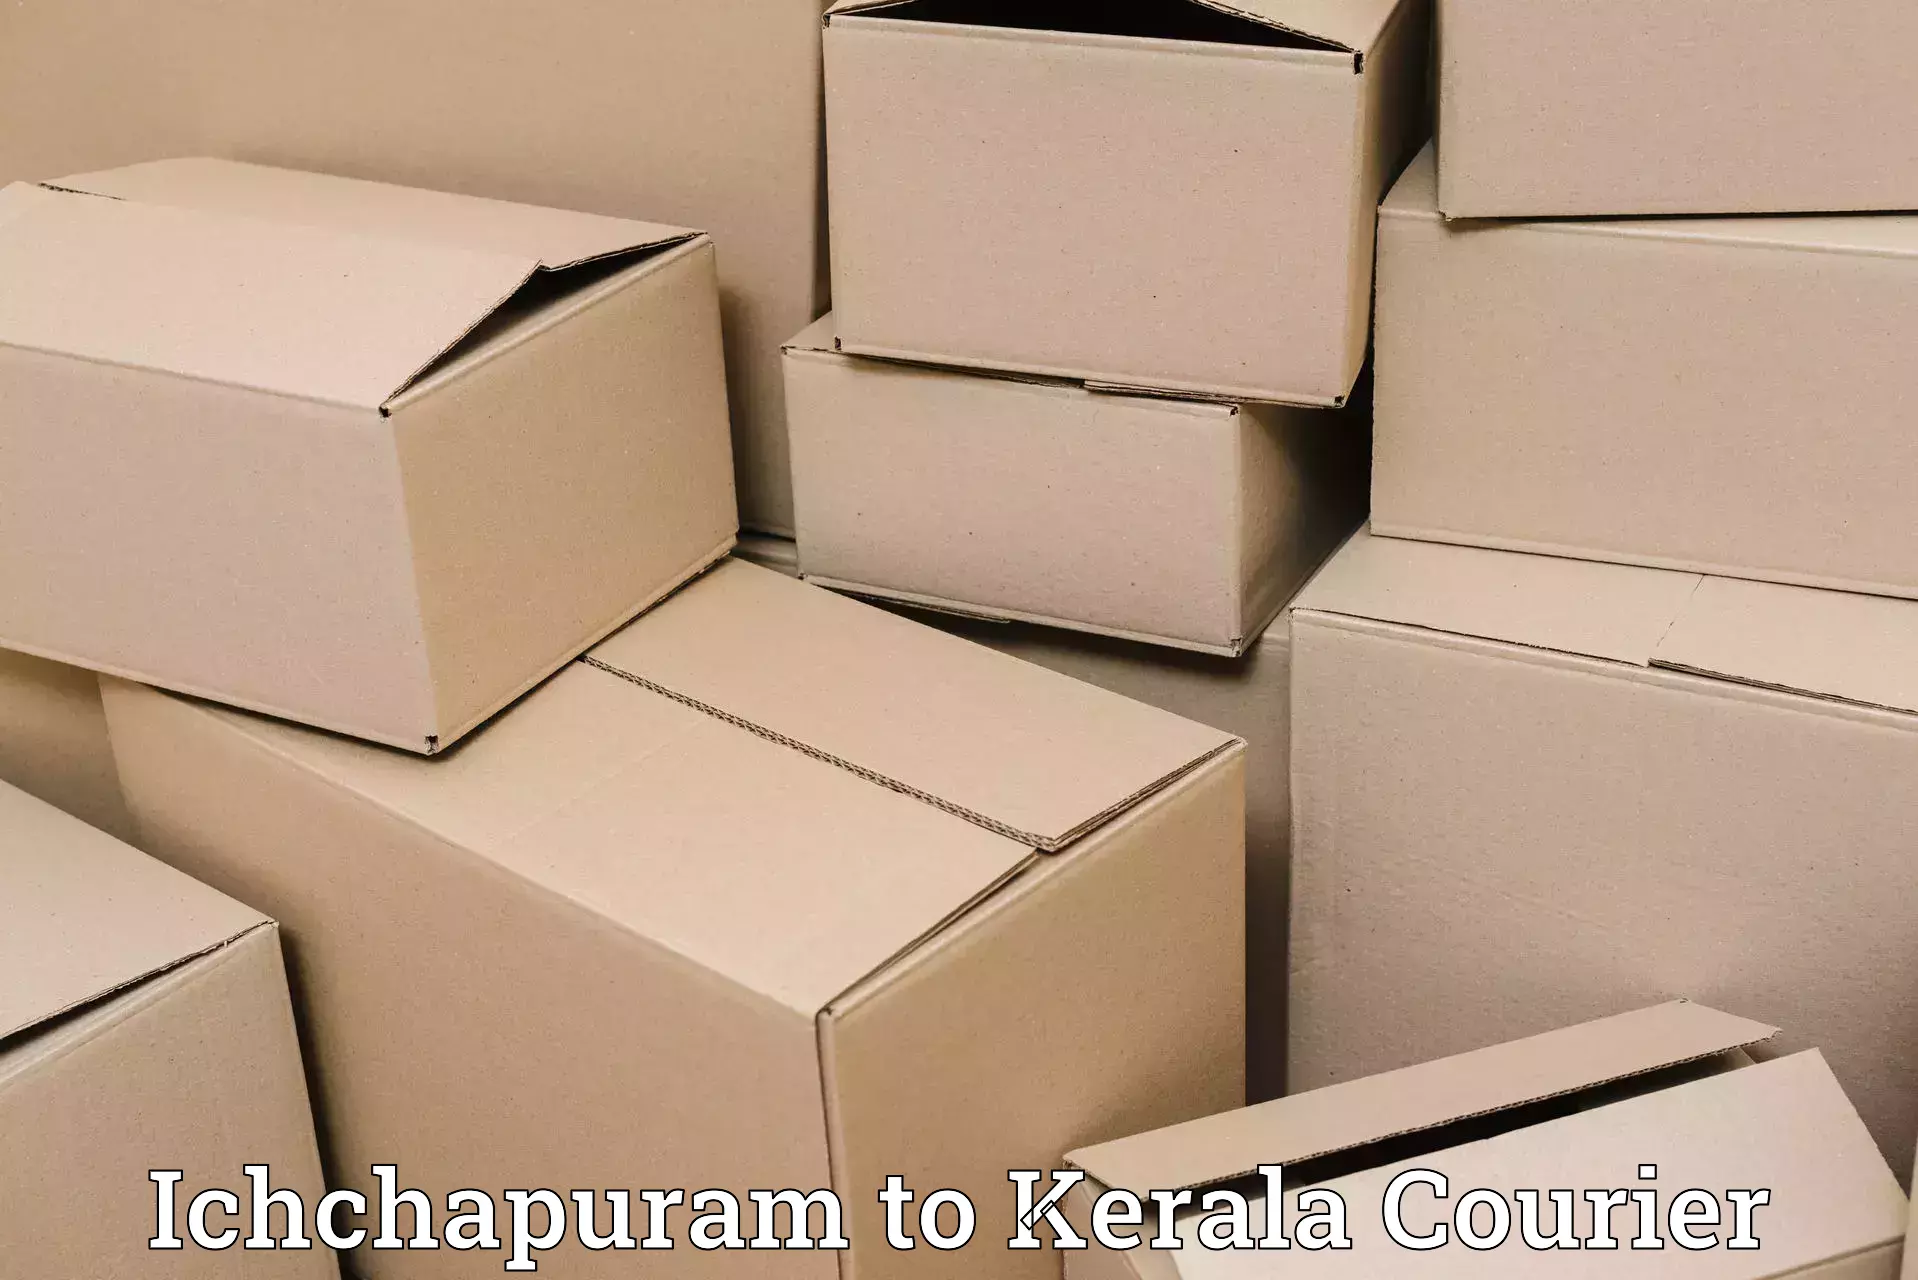 Reliable delivery network Ichchapuram to Perambra